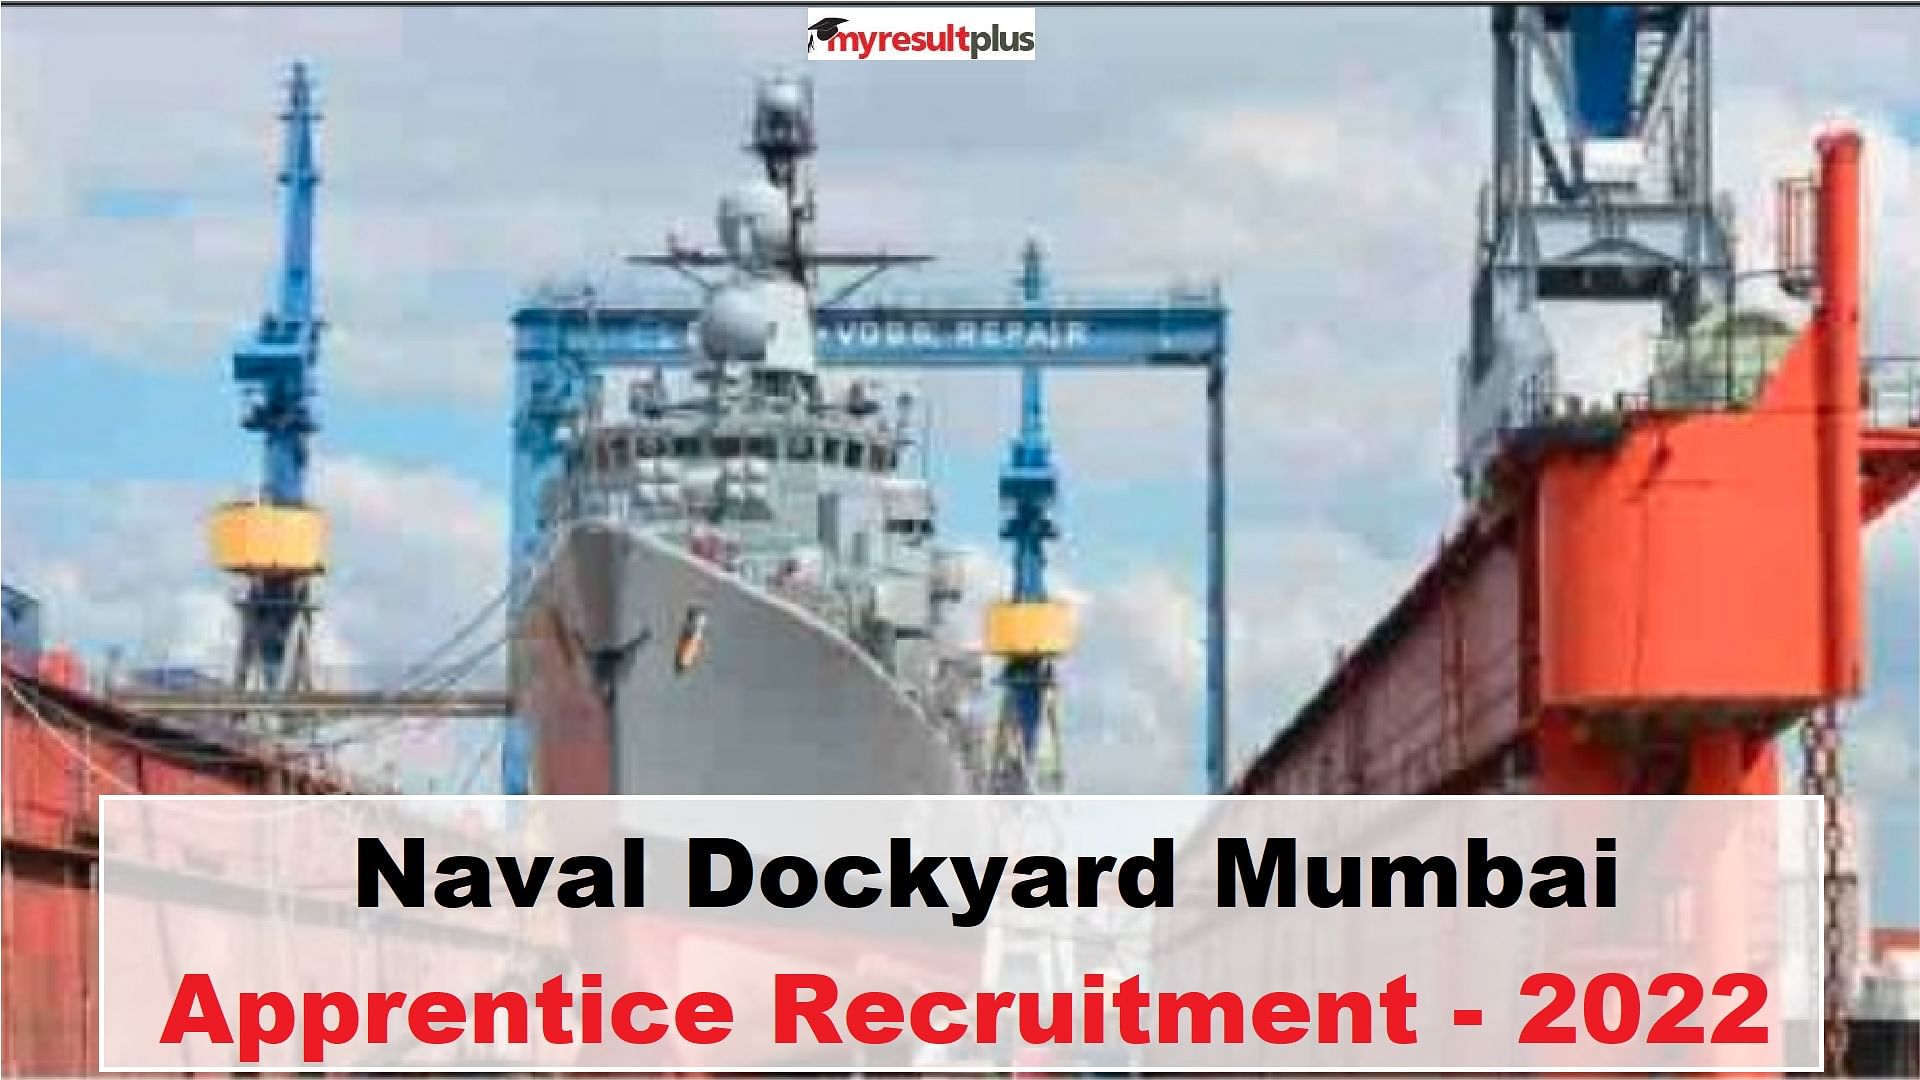 Naval Dockyard Mumbai apprentice 2022: Application Window Deadline Today, Get Direct Link Here